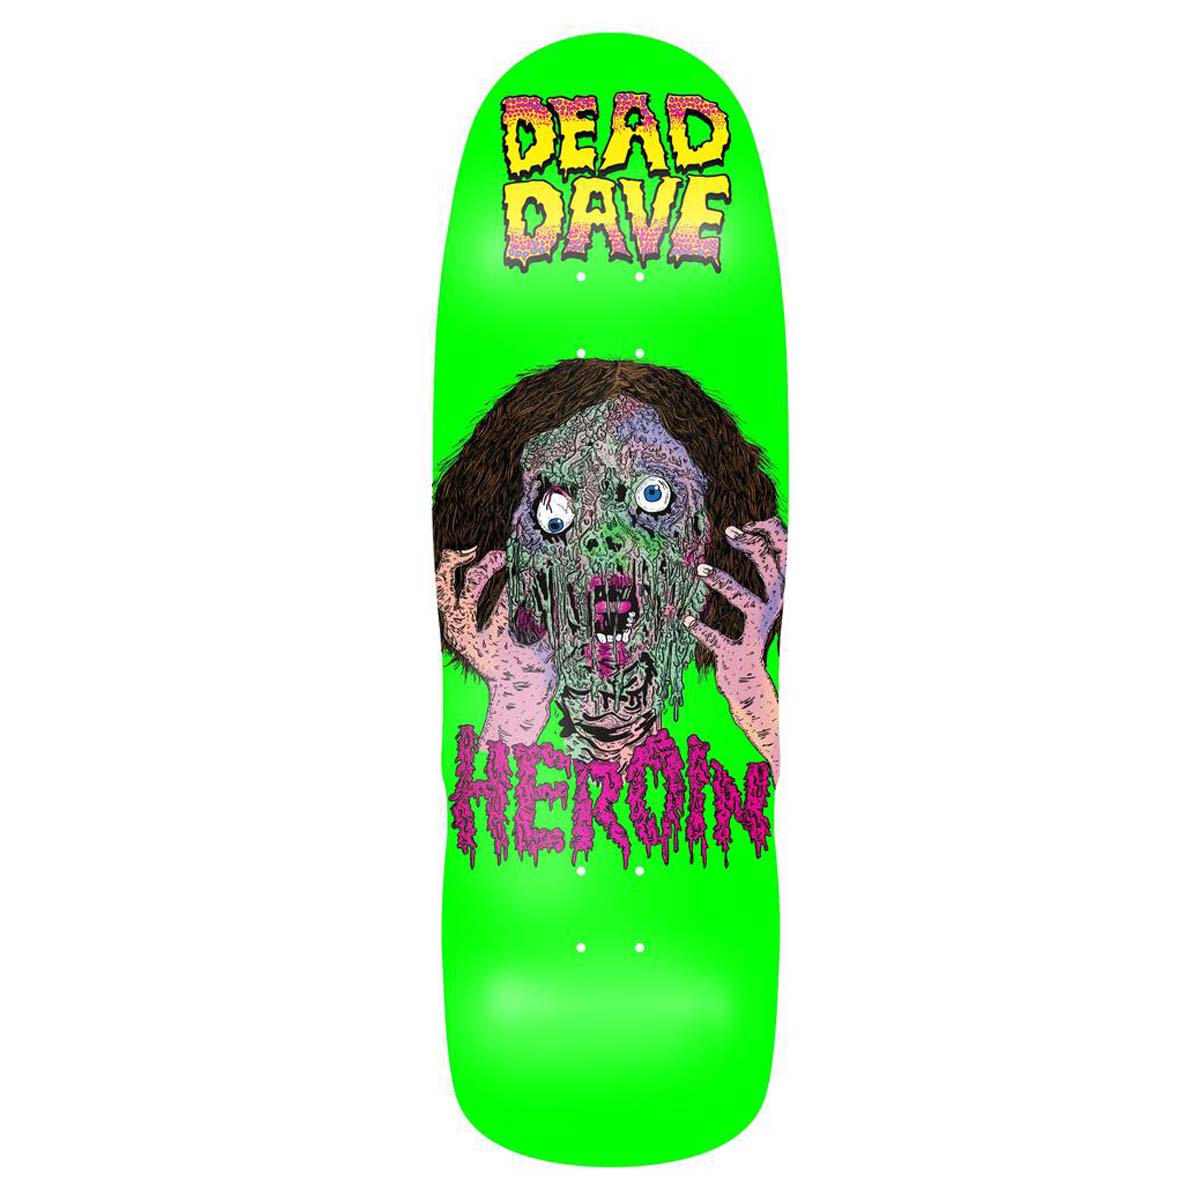 Heroin Skateboards "Dead Dave- Face Melter" 10.1" Deck